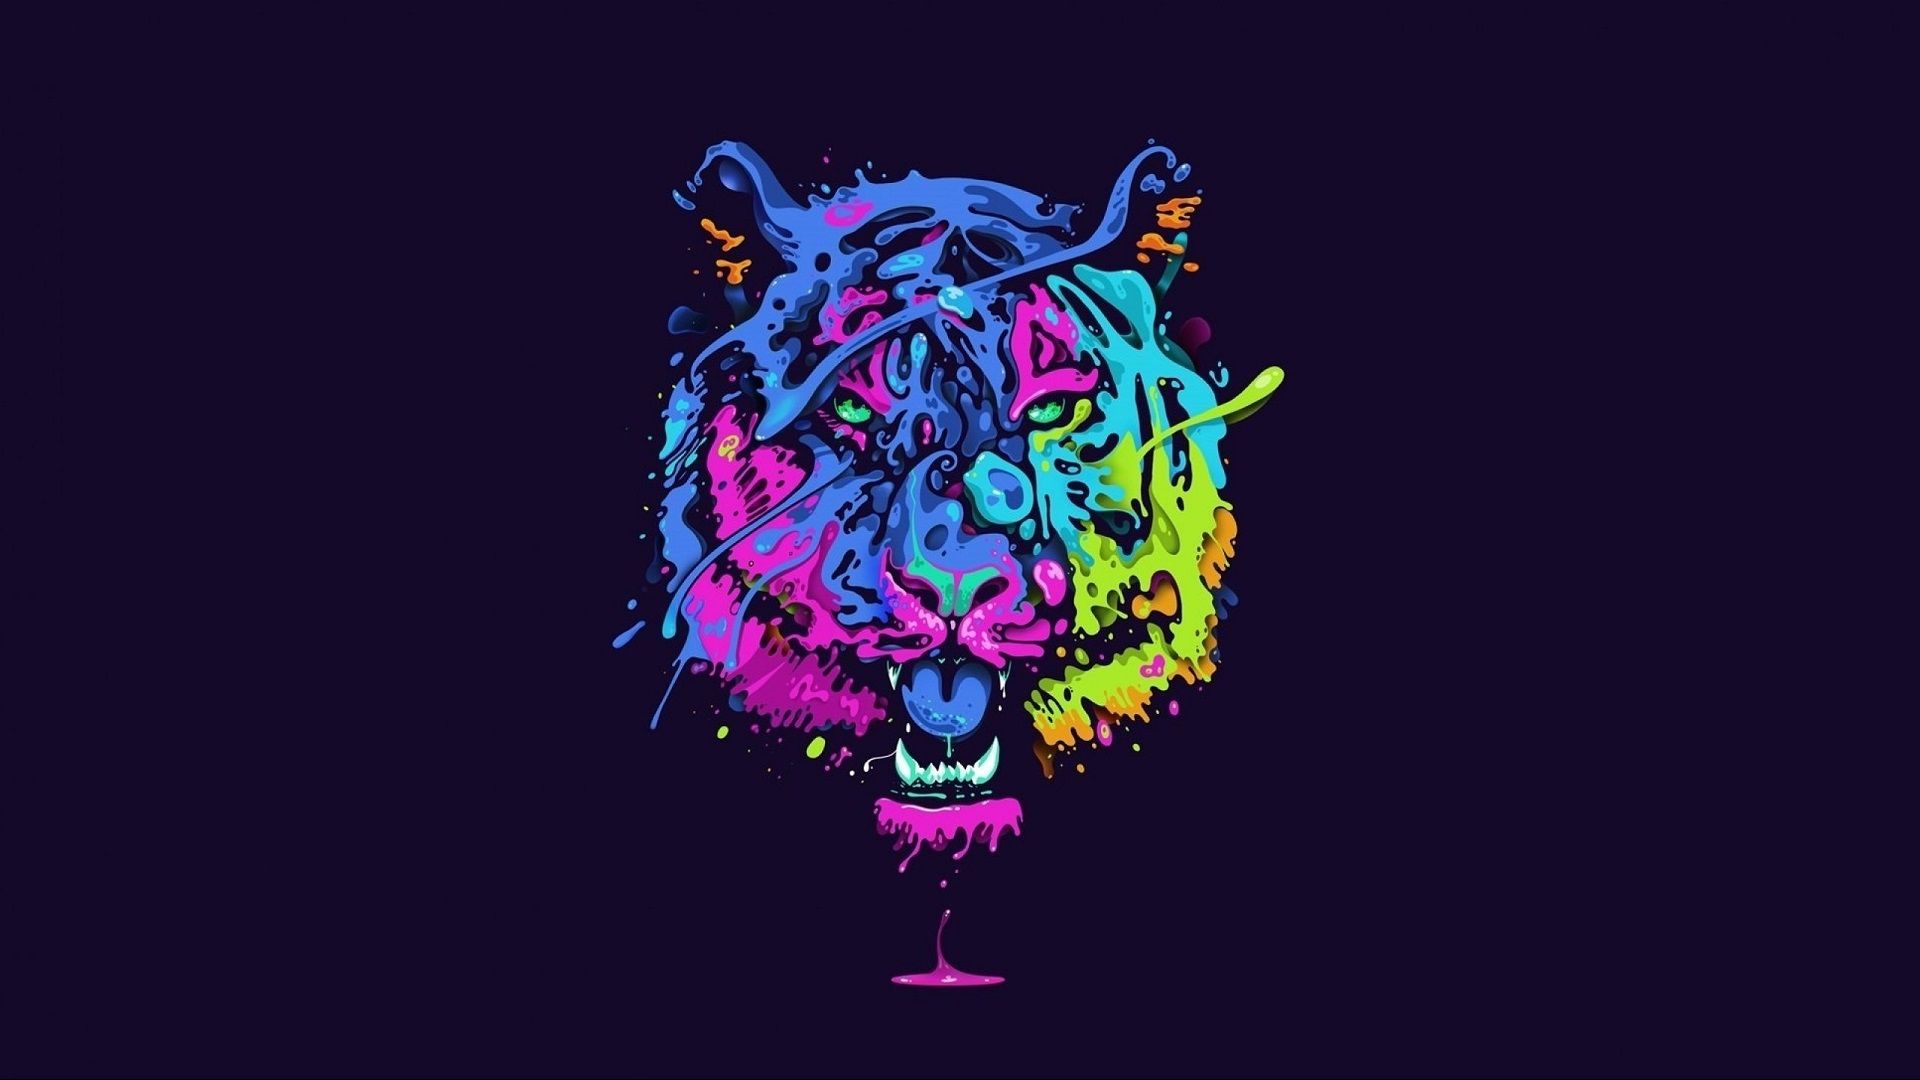 #animals, #tiger, #big cats, #neon, #artwork, #colorful